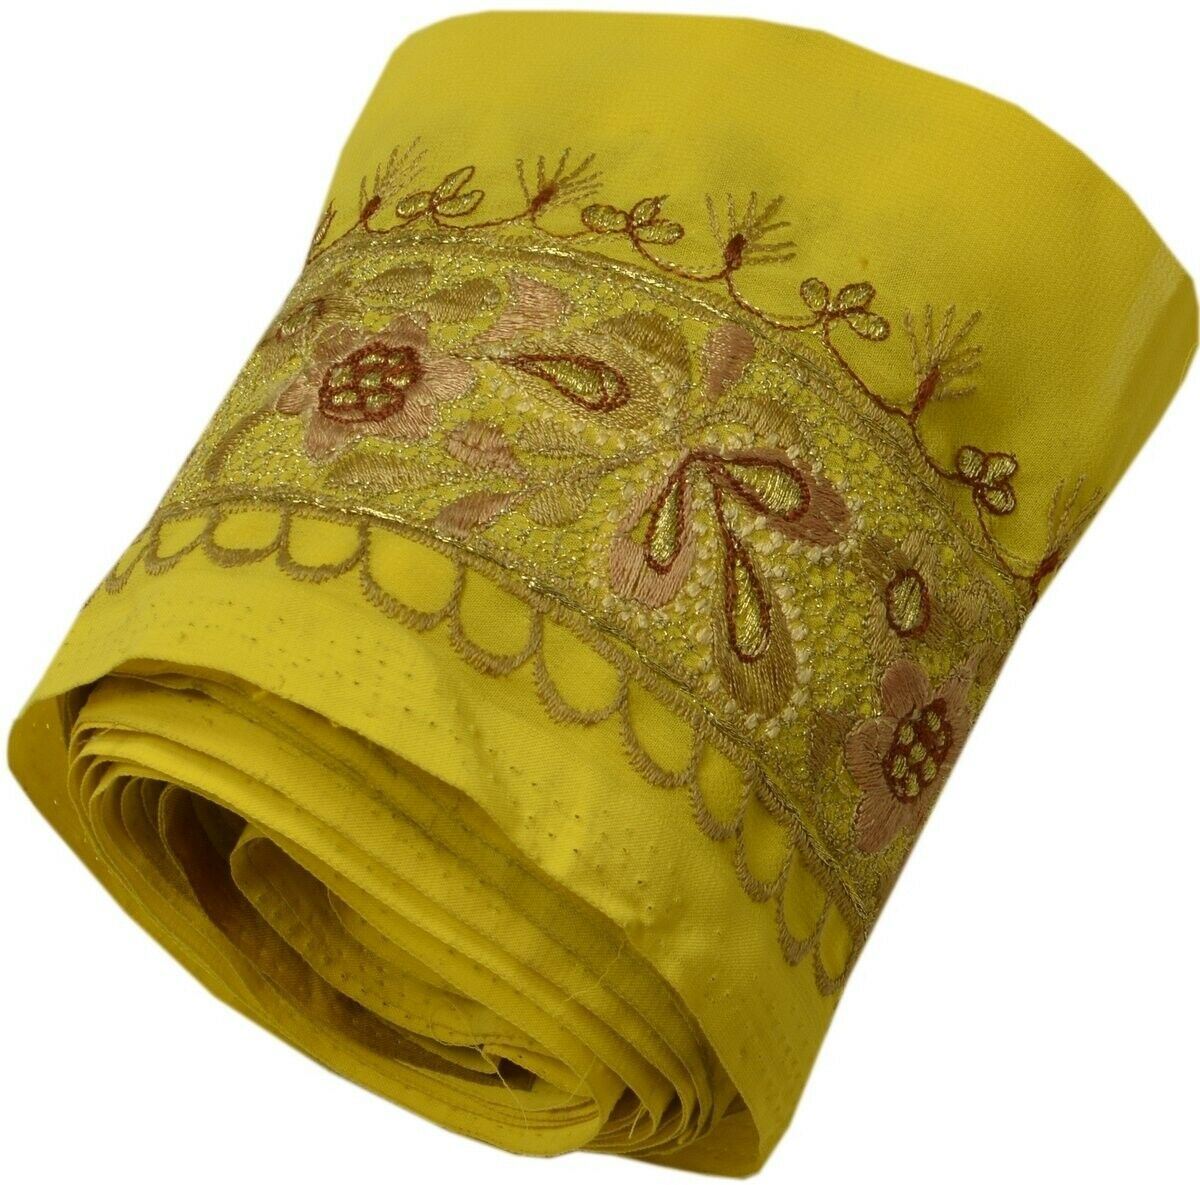 Vintage Sari Border Indian Craft Trim Embroidered Yellow Sewing Ribbon Lace